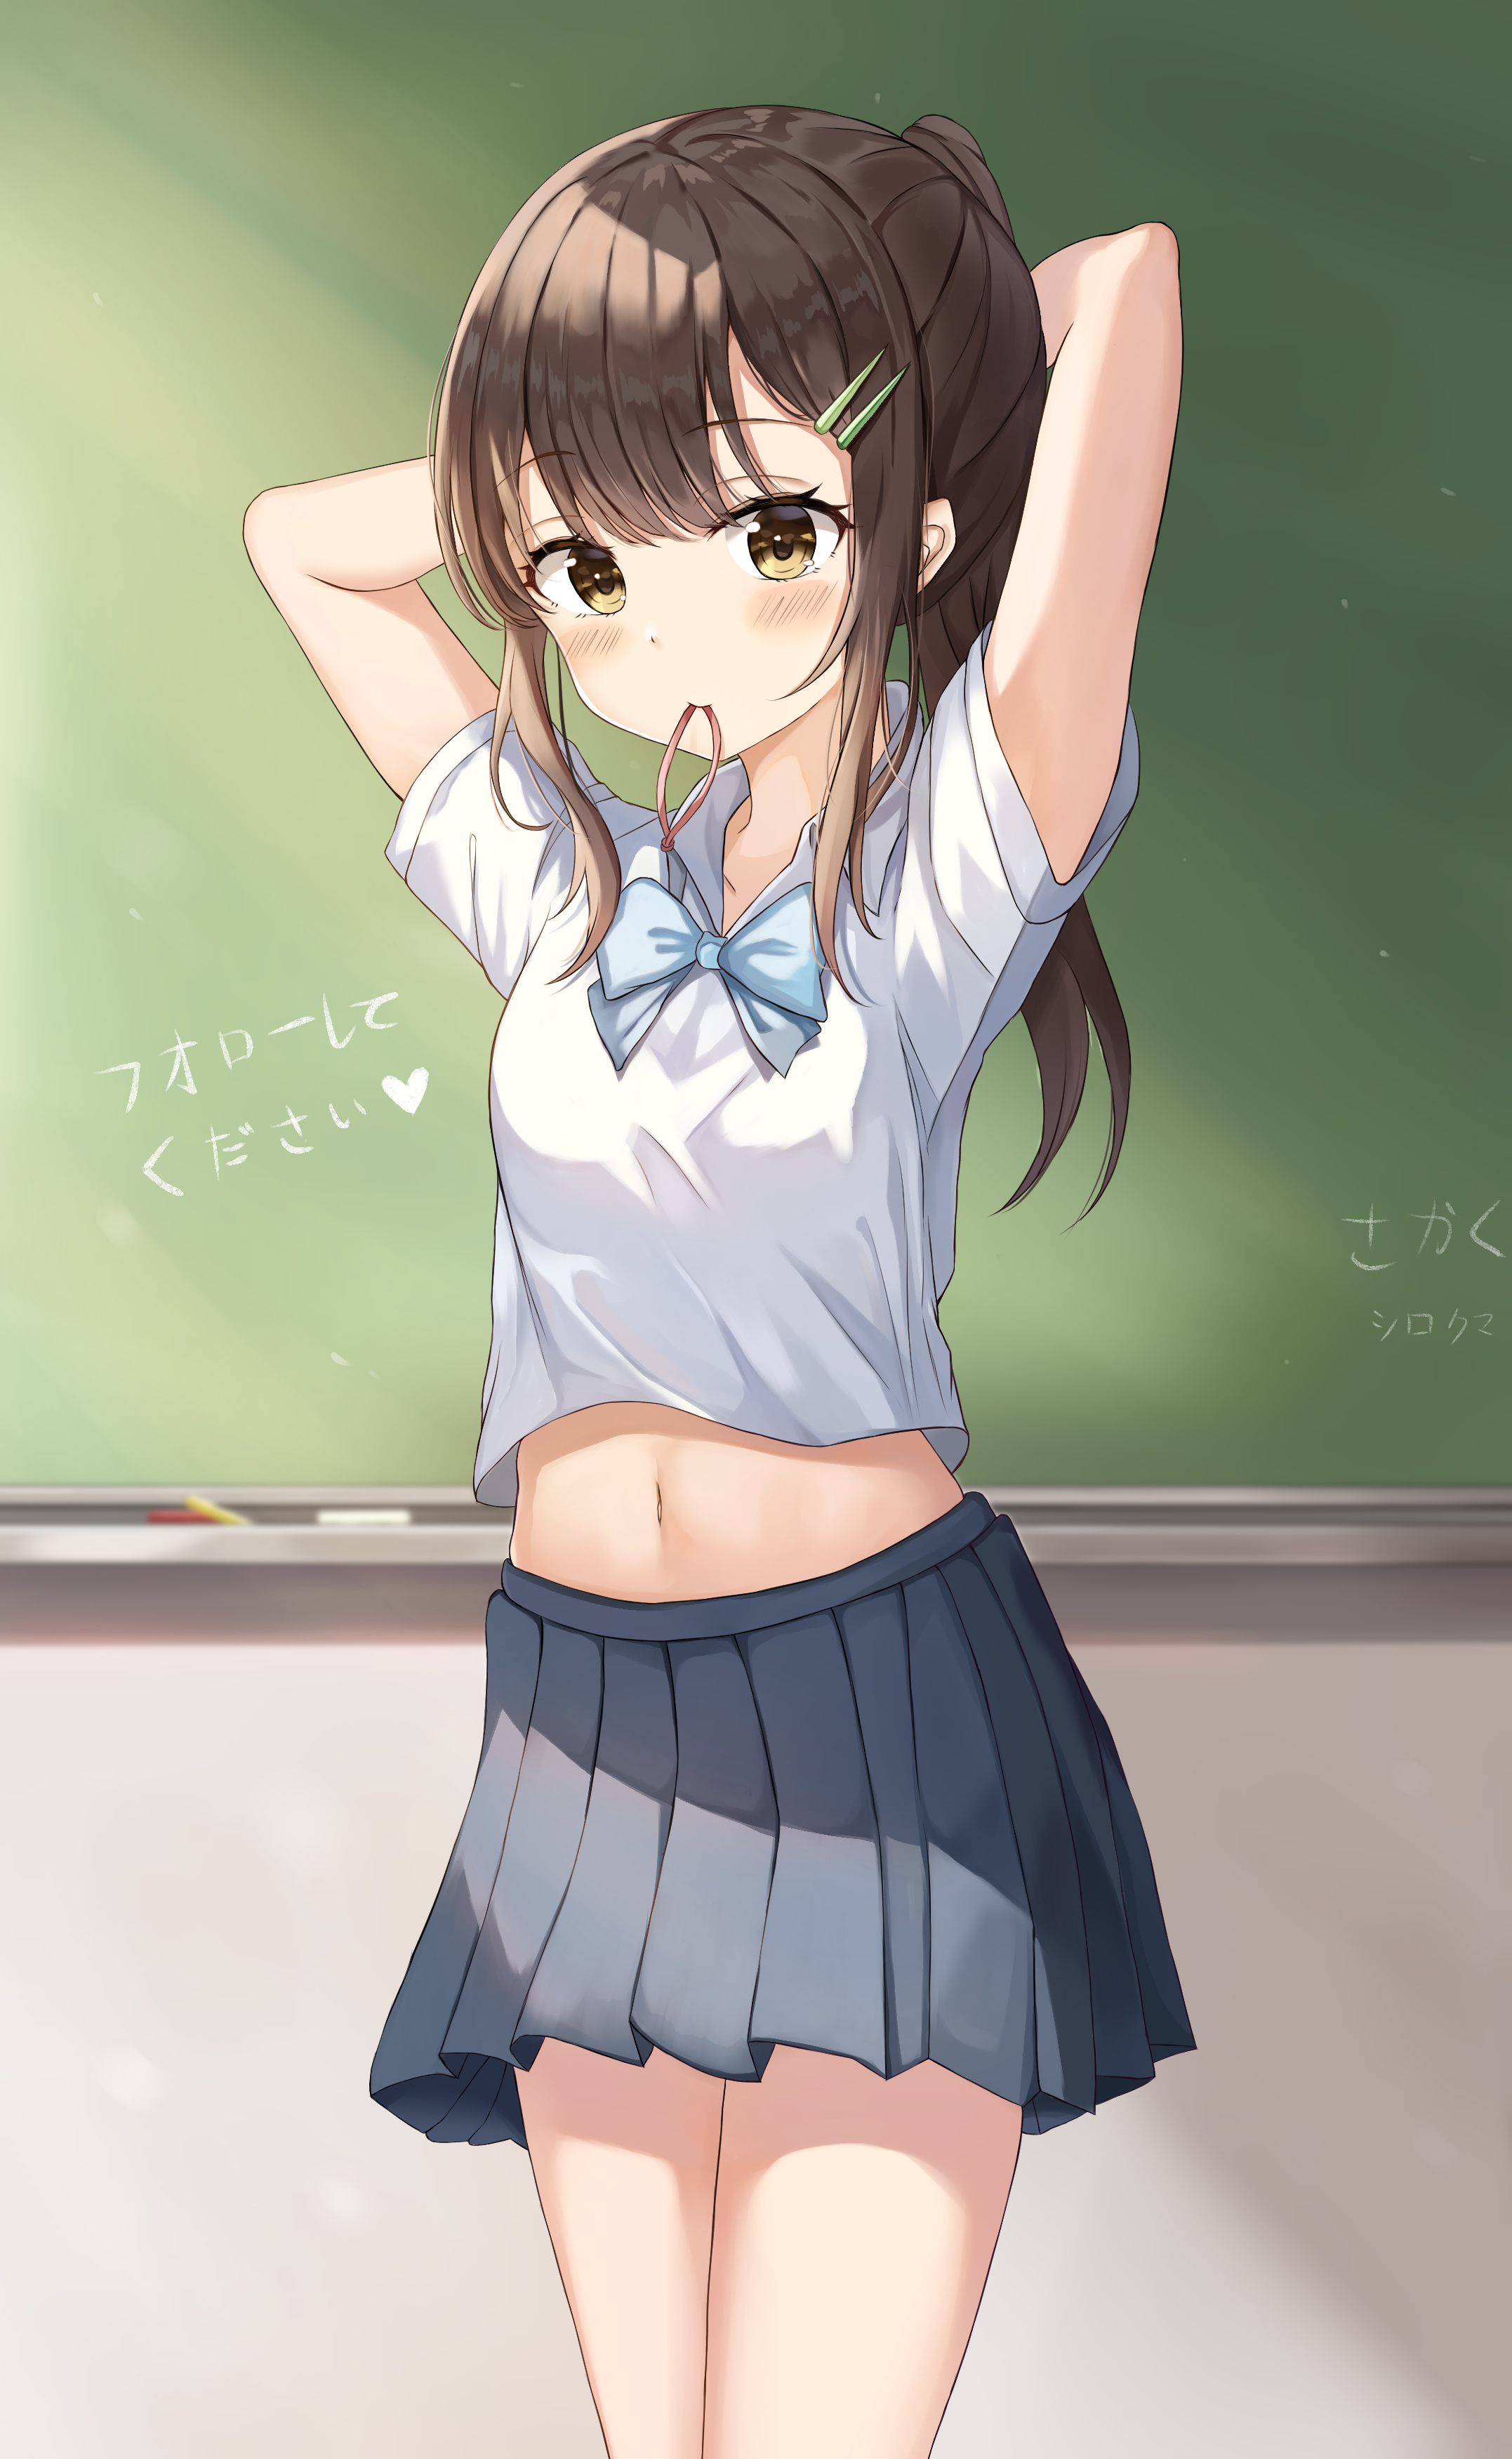 Anime Girl In School Uniform Wallpapers